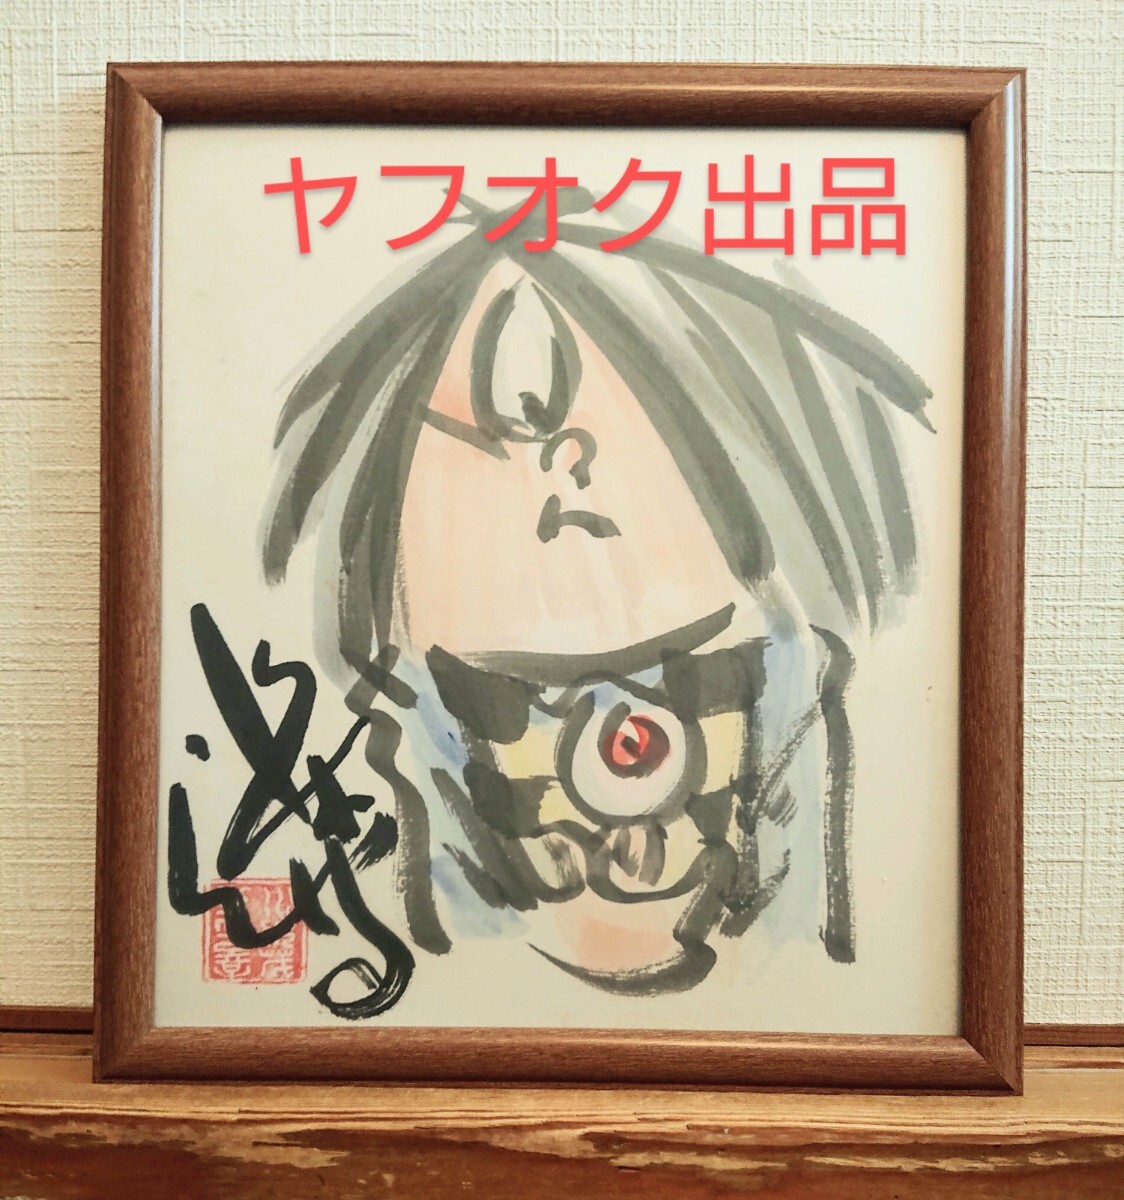 Shigeru Mizuki GeGeGe no Kitaro Signo Papel de colores Acuarela, historietas, productos de anime, firmar, pintura dibujada a mano